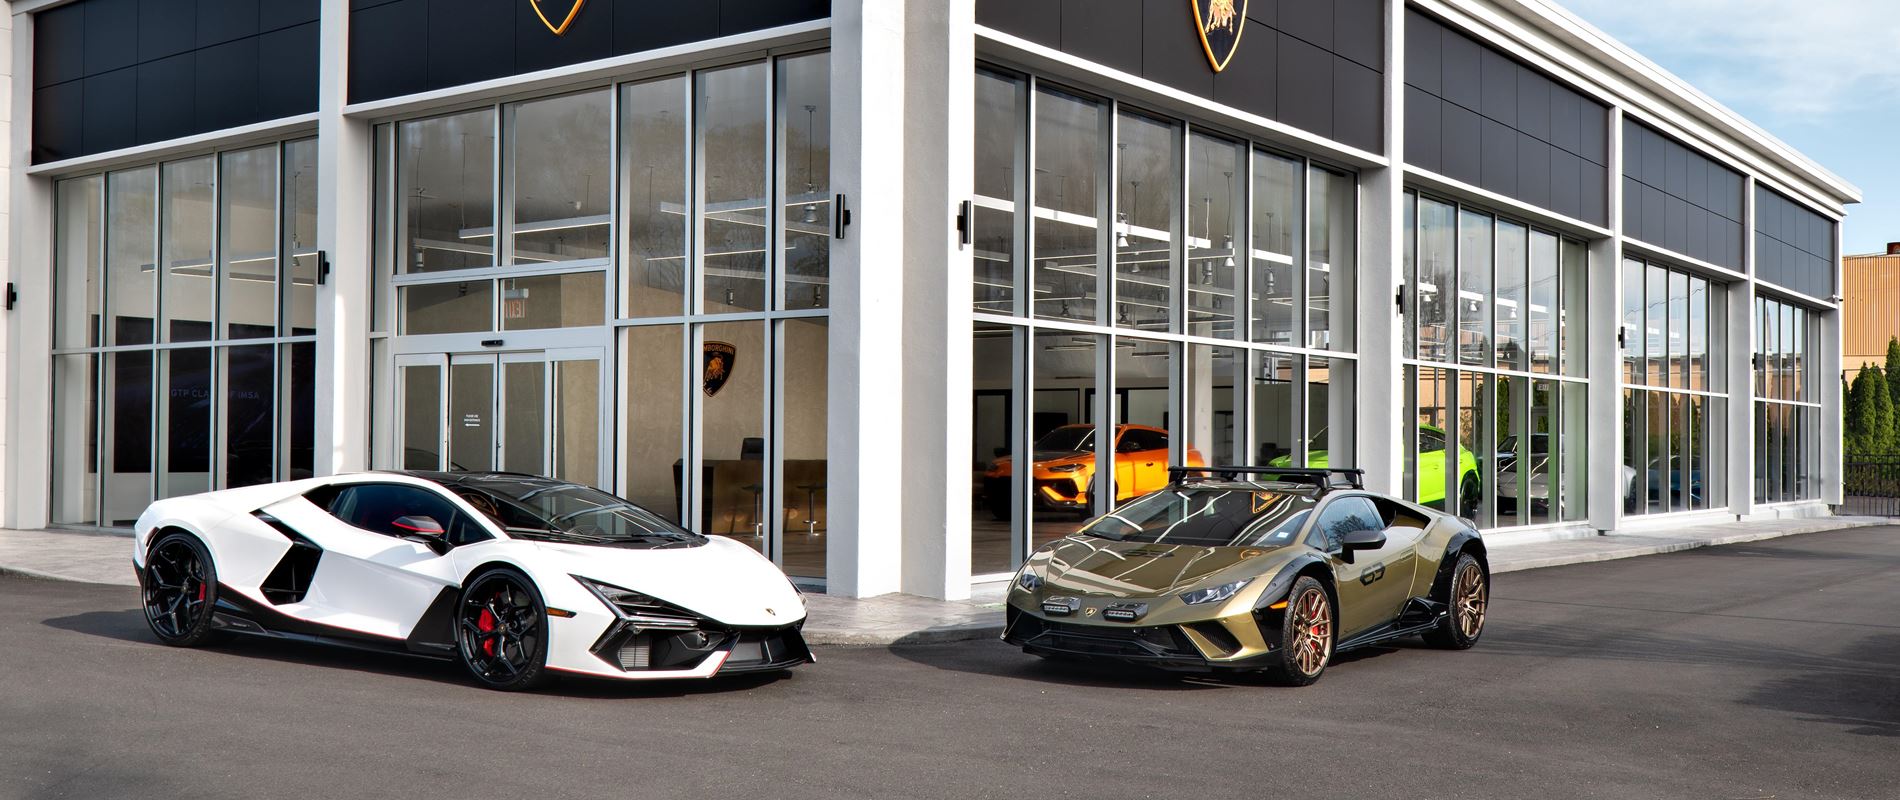 Automobili Lamborghini Unveils Redesigned Showroom in Long Island Showcasing First Plug In Hybrid Super SUV